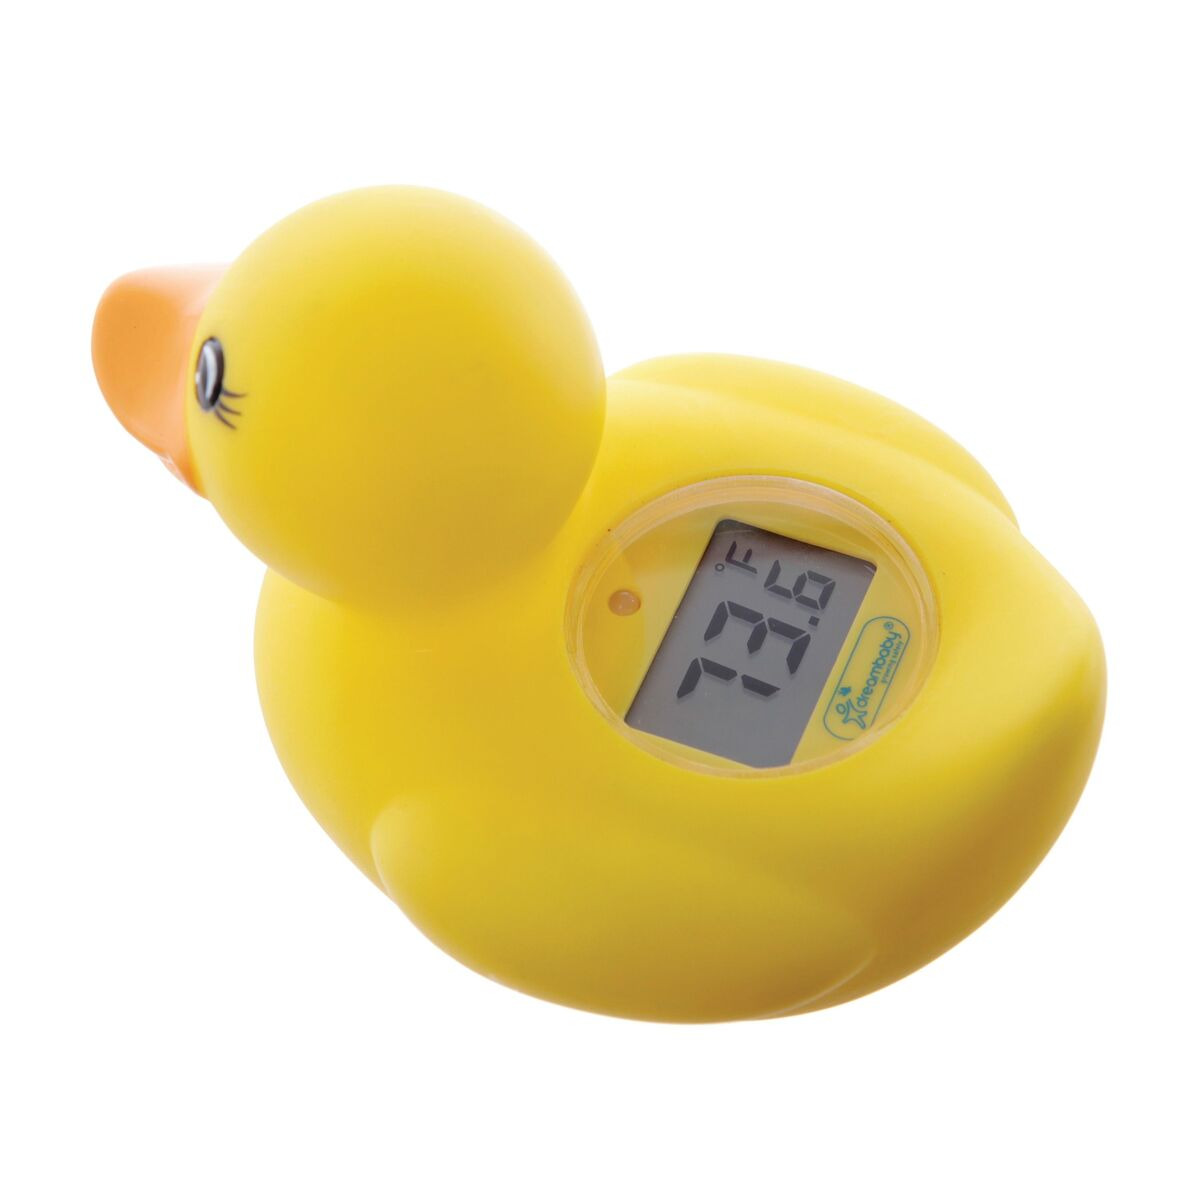 Dreambaby Bath Thermometer Duck